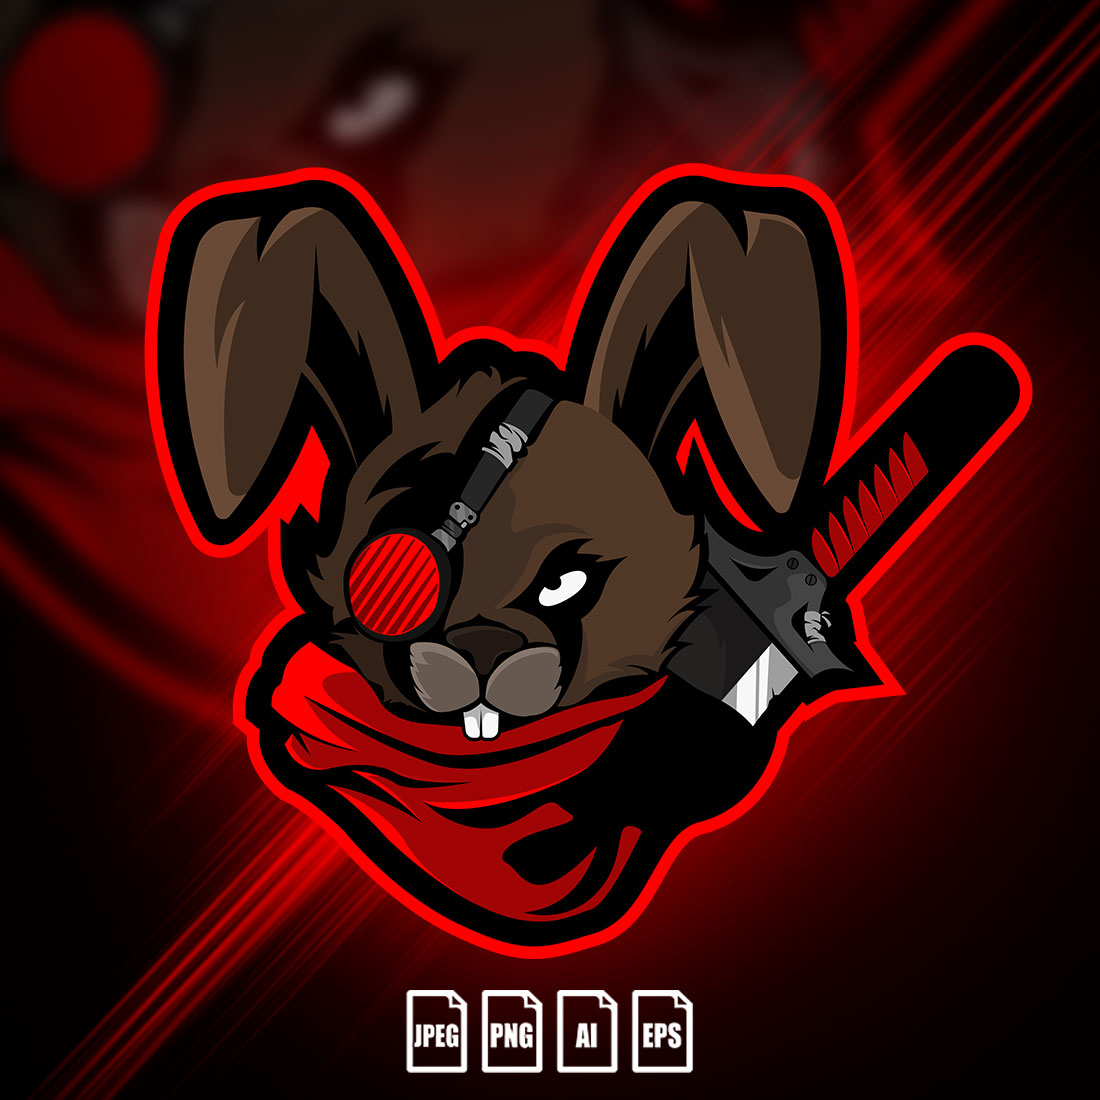 Ninja Rabbit Gaming logo for Esports Gamers & Streamers cover image.